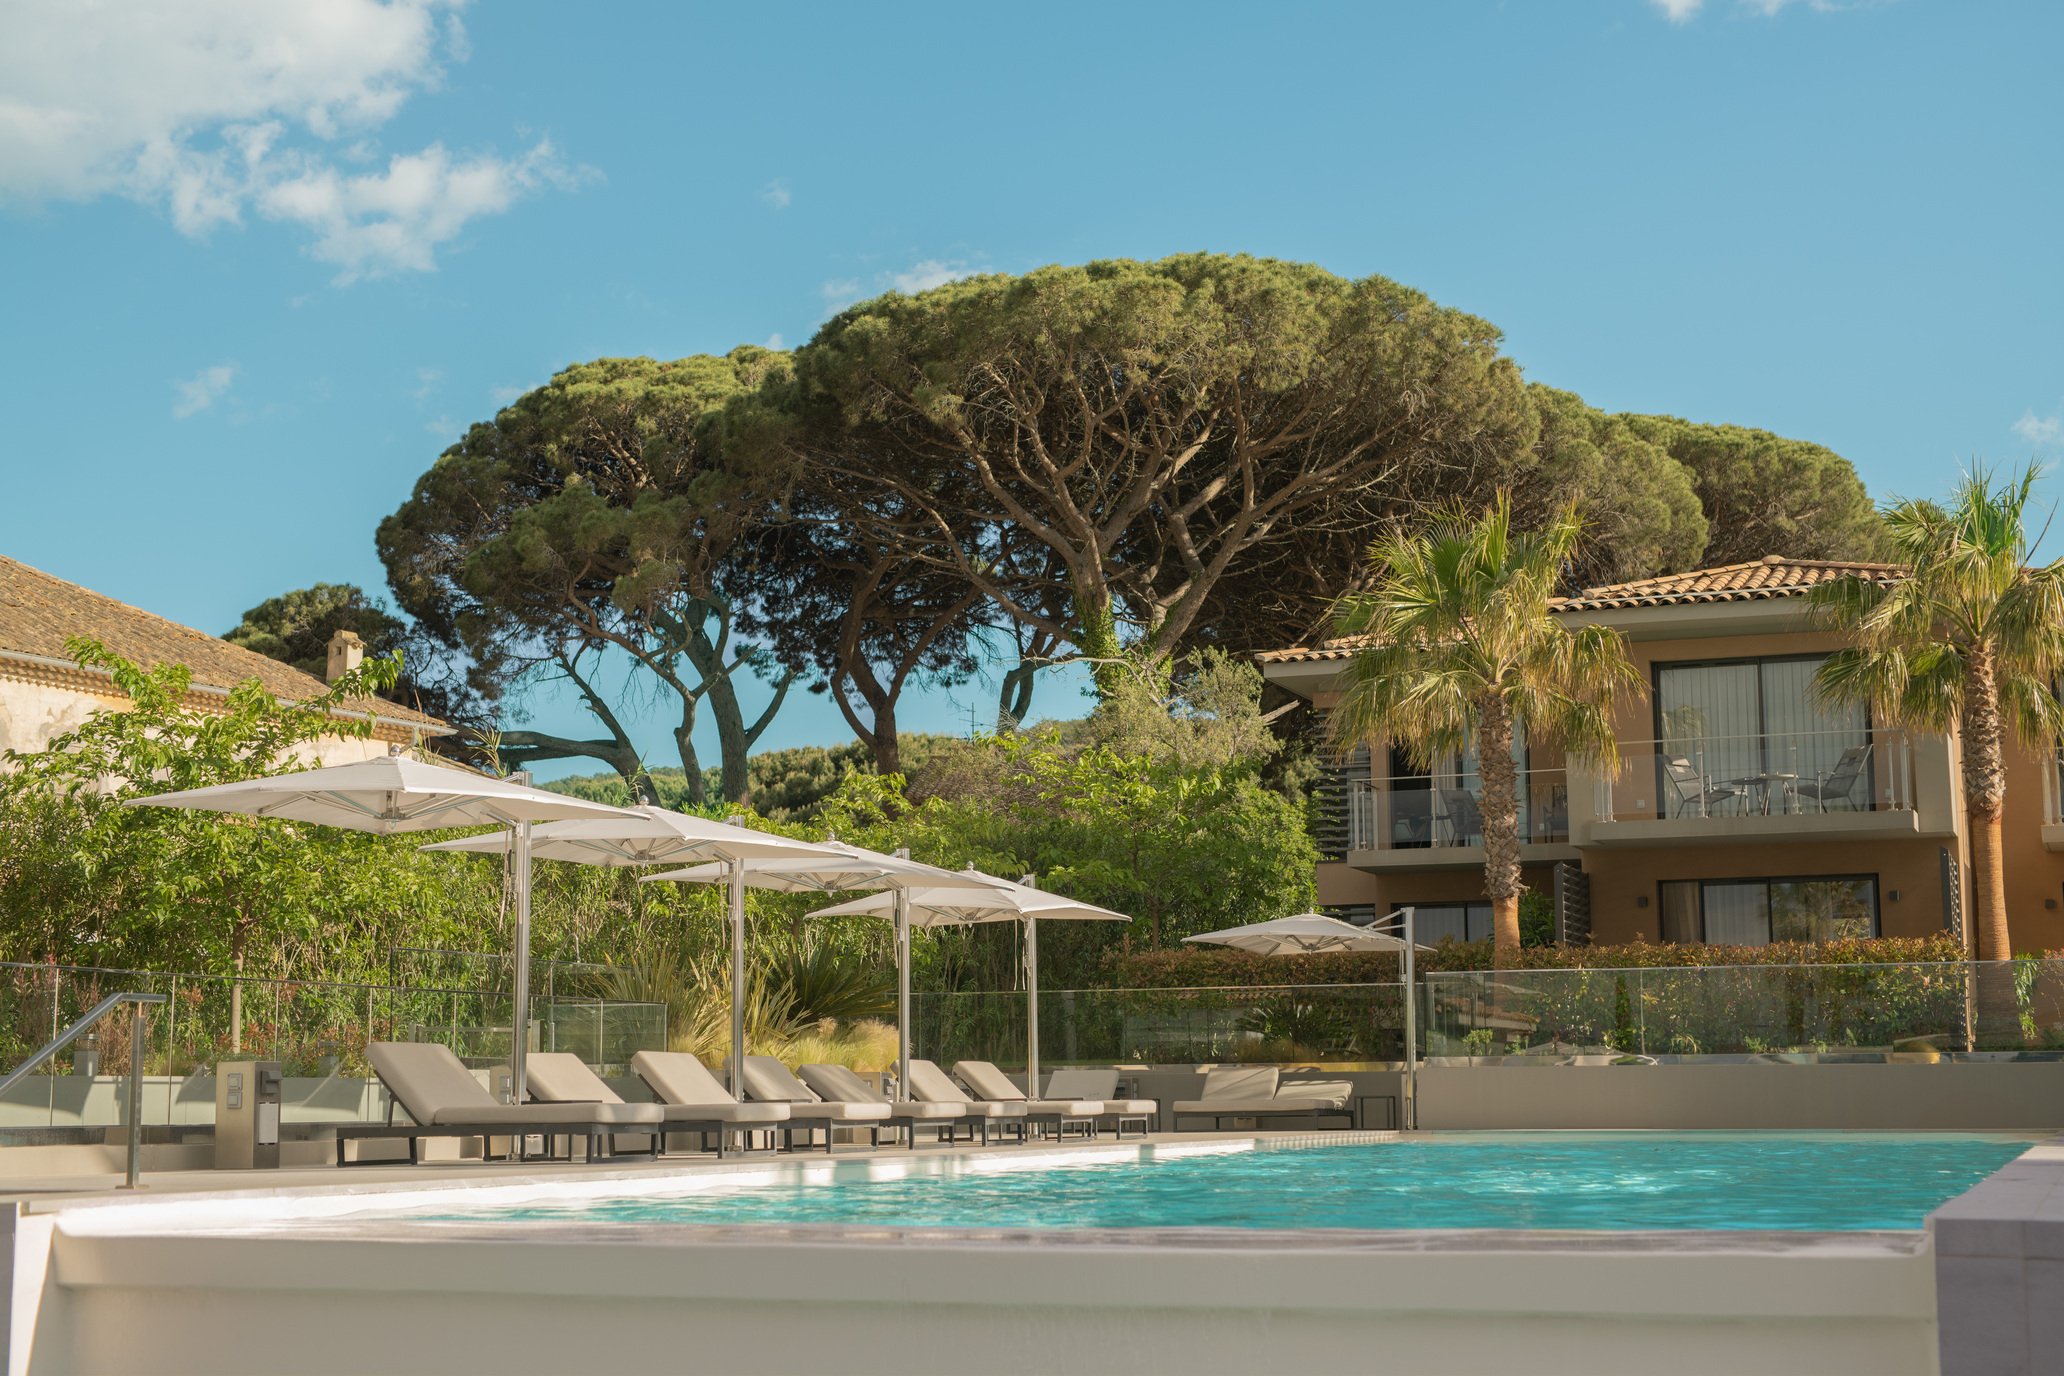 Pool - Kube Hotel Saint-Tropez - South of France